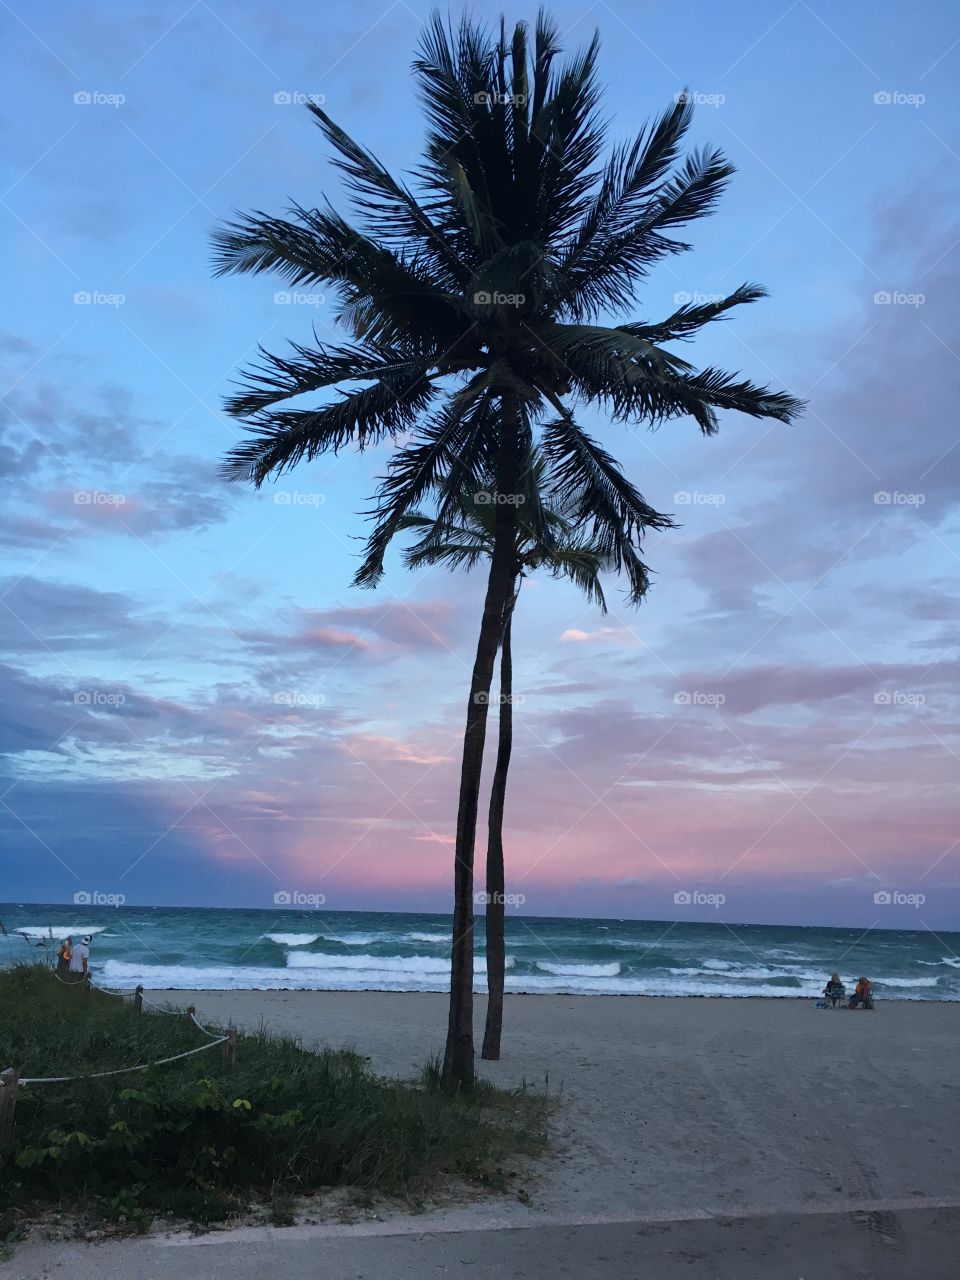 Romantic evening on Miami beach at sunset